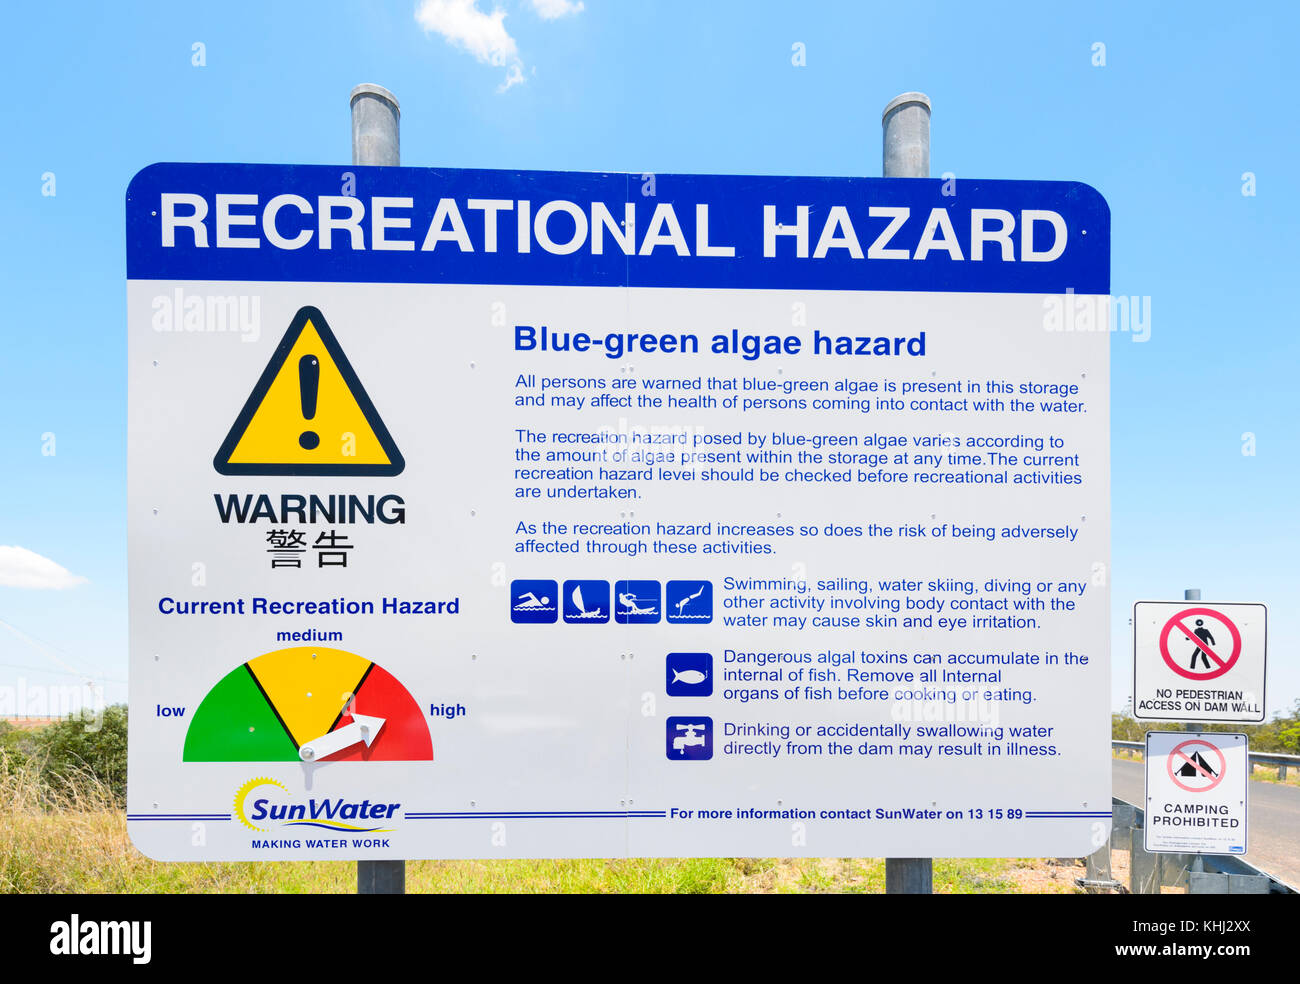 Recreational hazard sign due to blue-green algae present in water at Lake Maraboon, Fairbairn Dam, near Emerald, Queensland, QLD, Australia Stock Photo